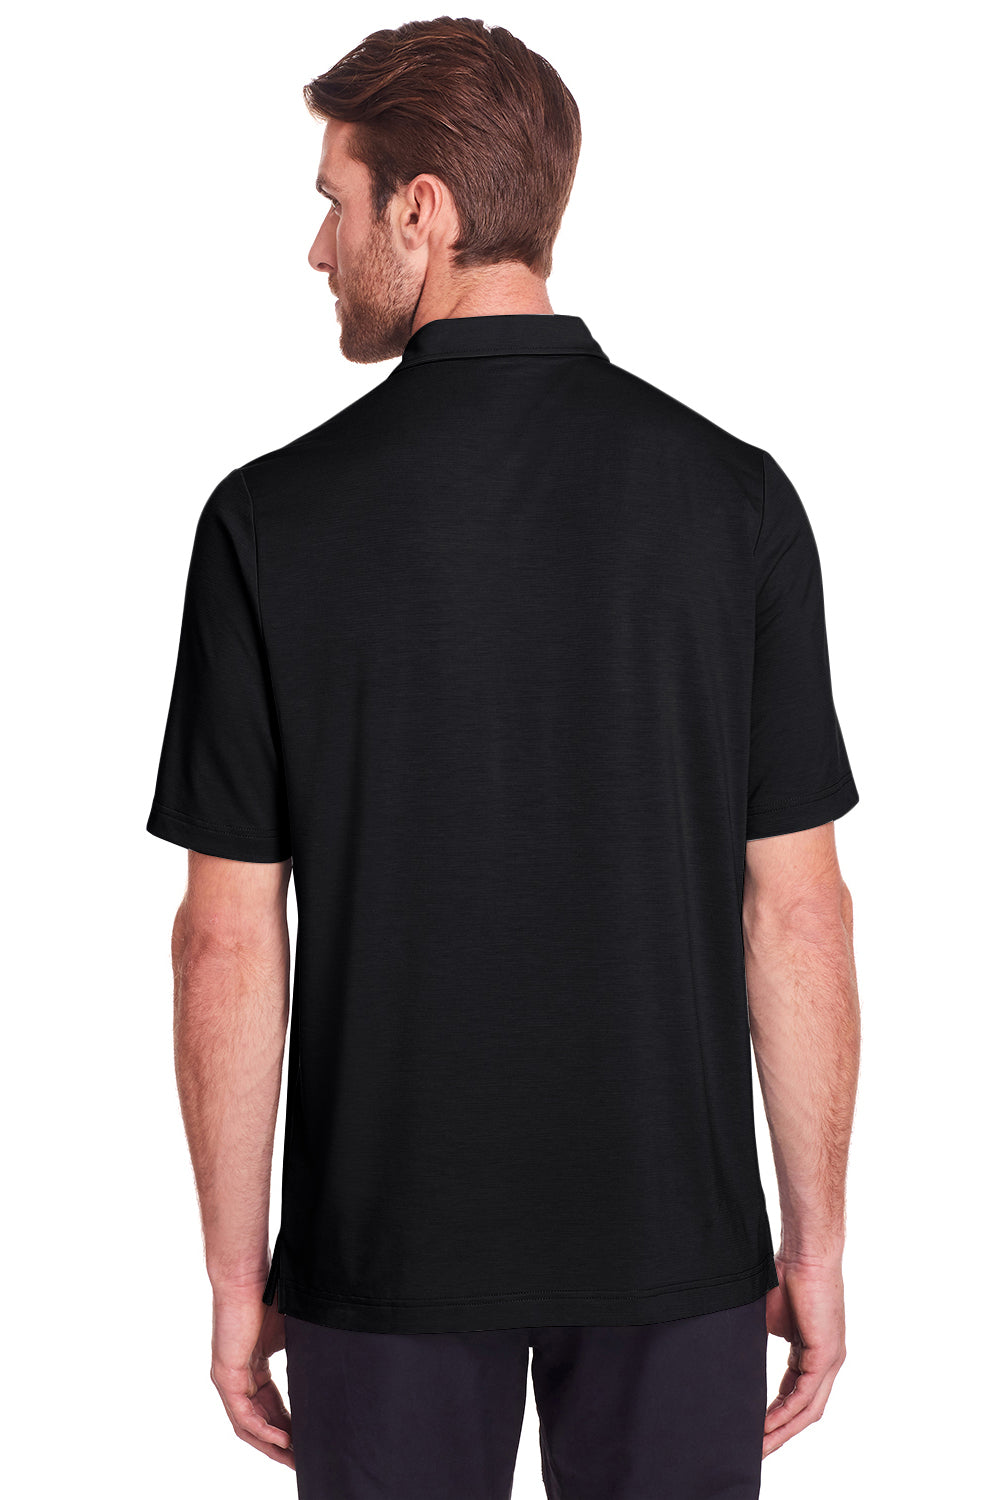 North End NE100 Mens Jaq Performance Moisture Wicking Short Sleeve Polo Shirt Black Back